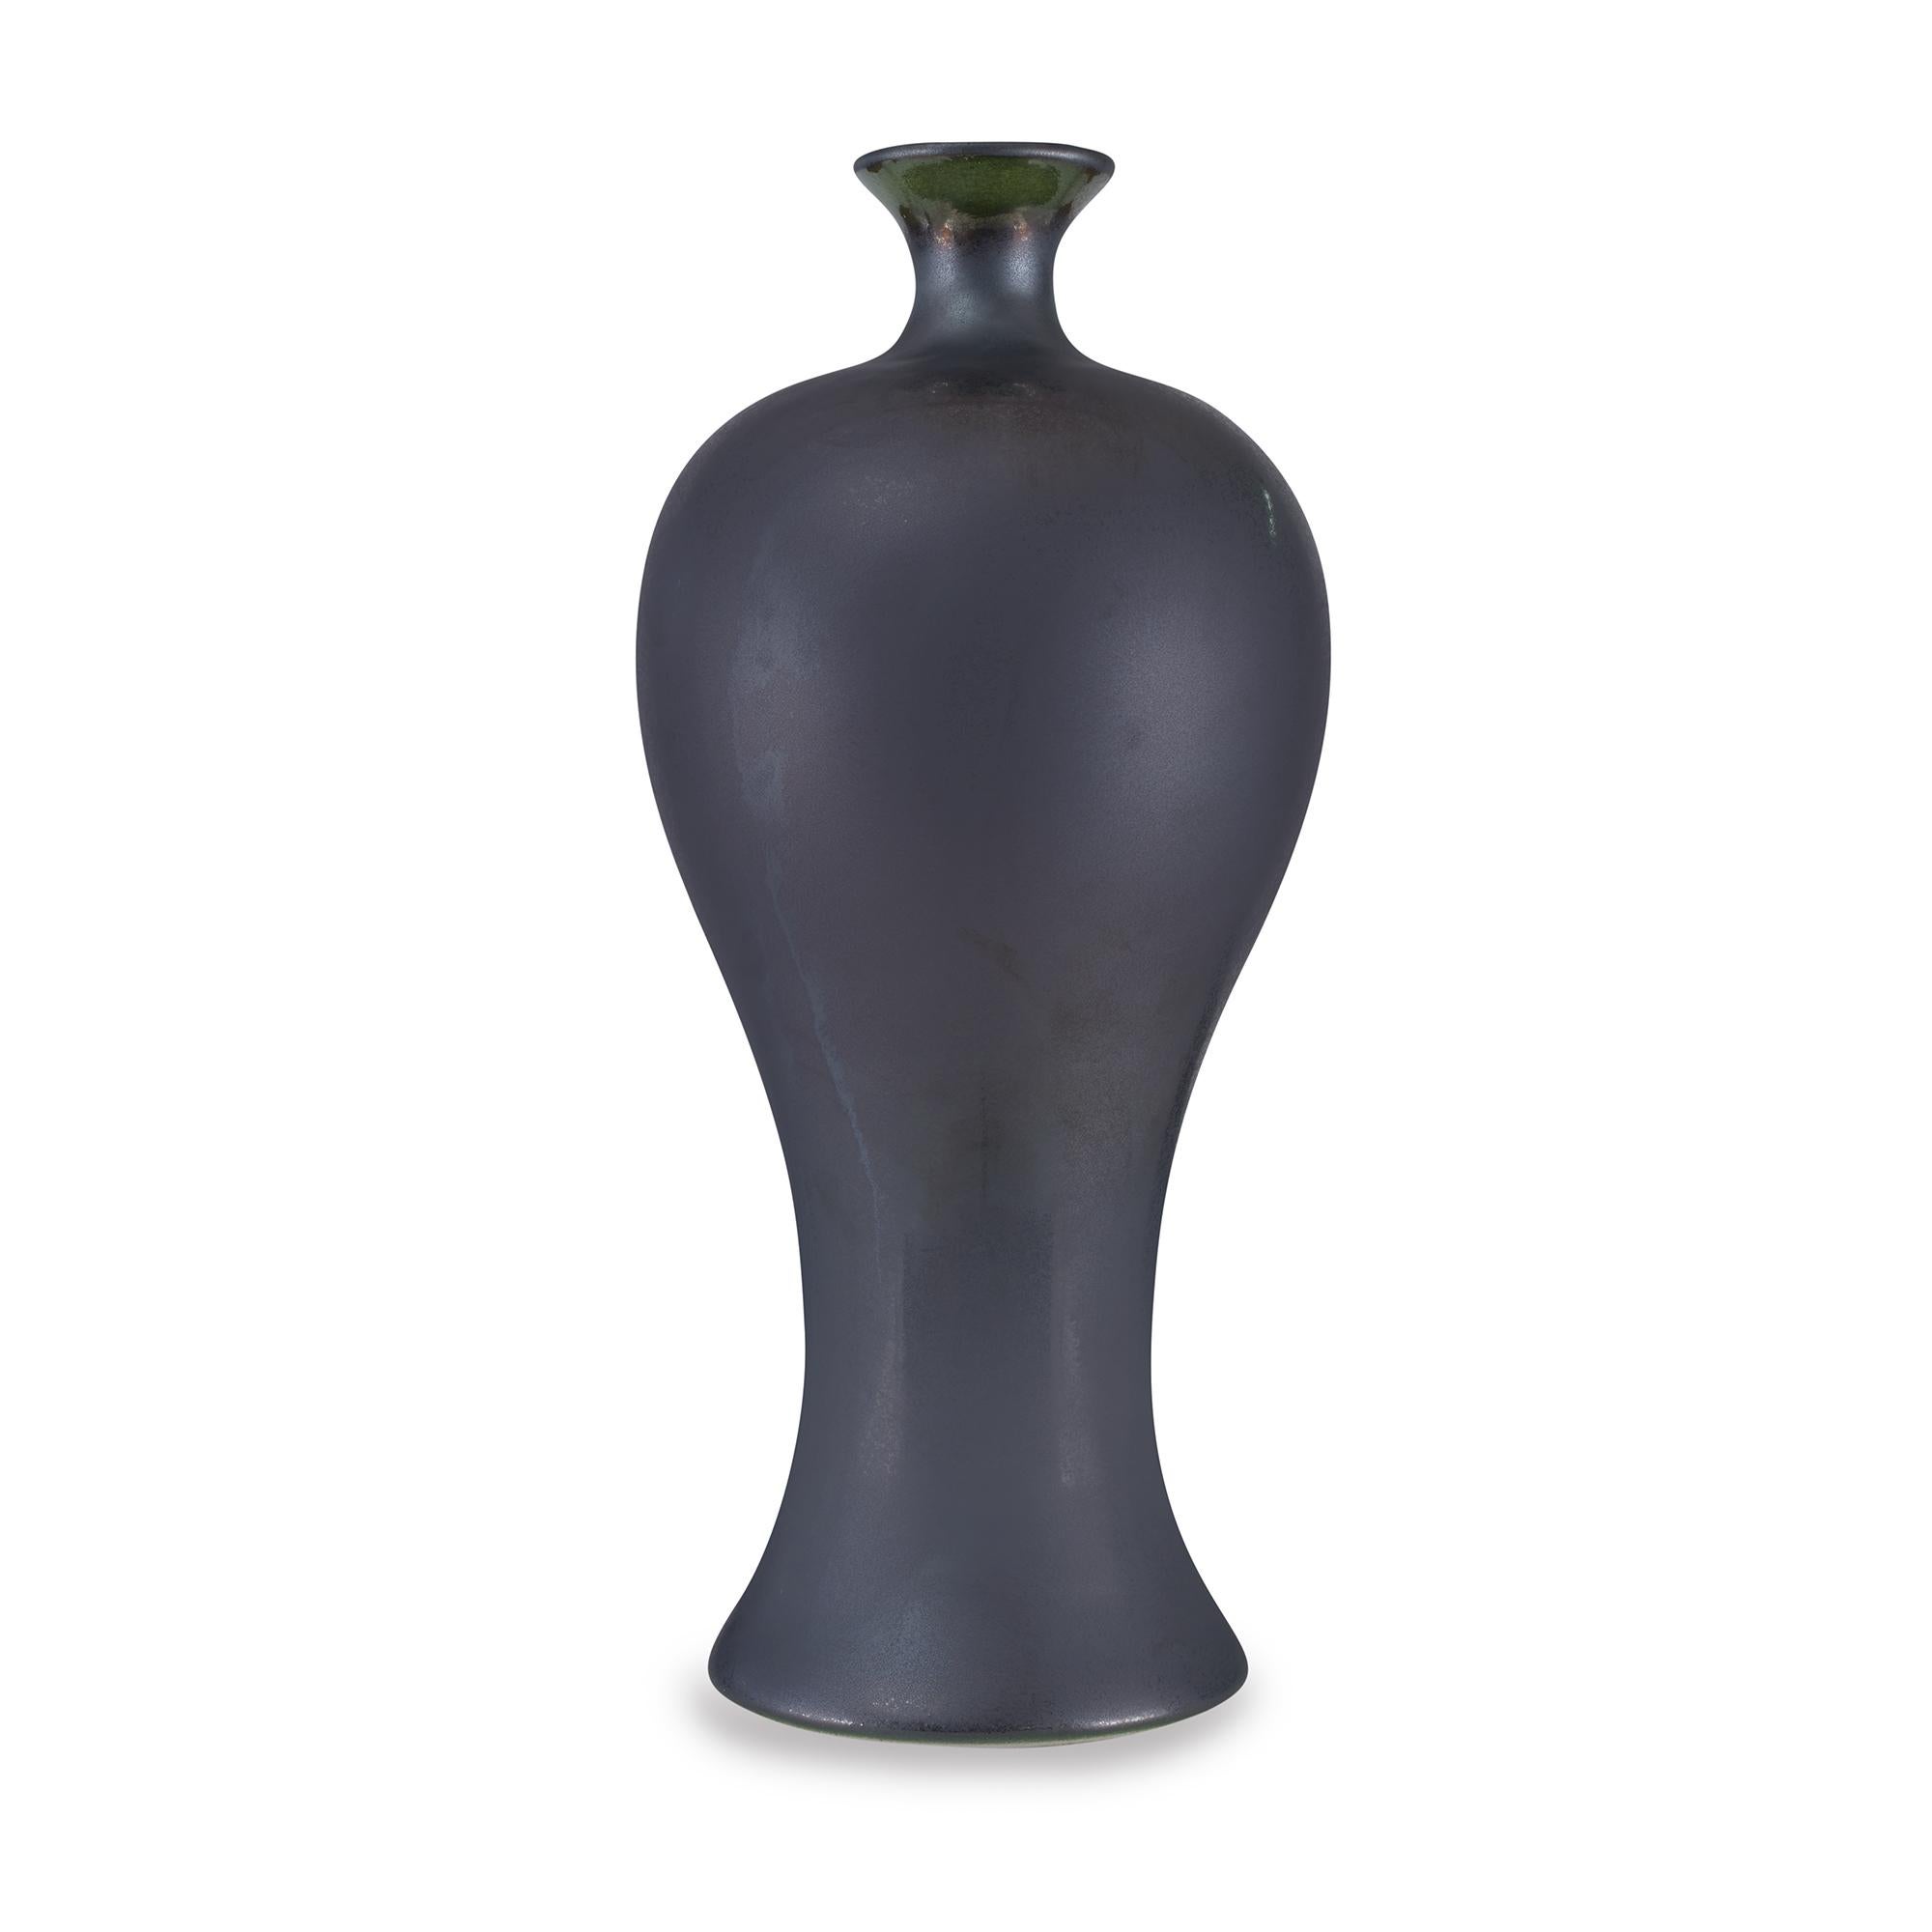 For Sale:  (Black) Quarry Vase in Ceramic by CuratedKravet